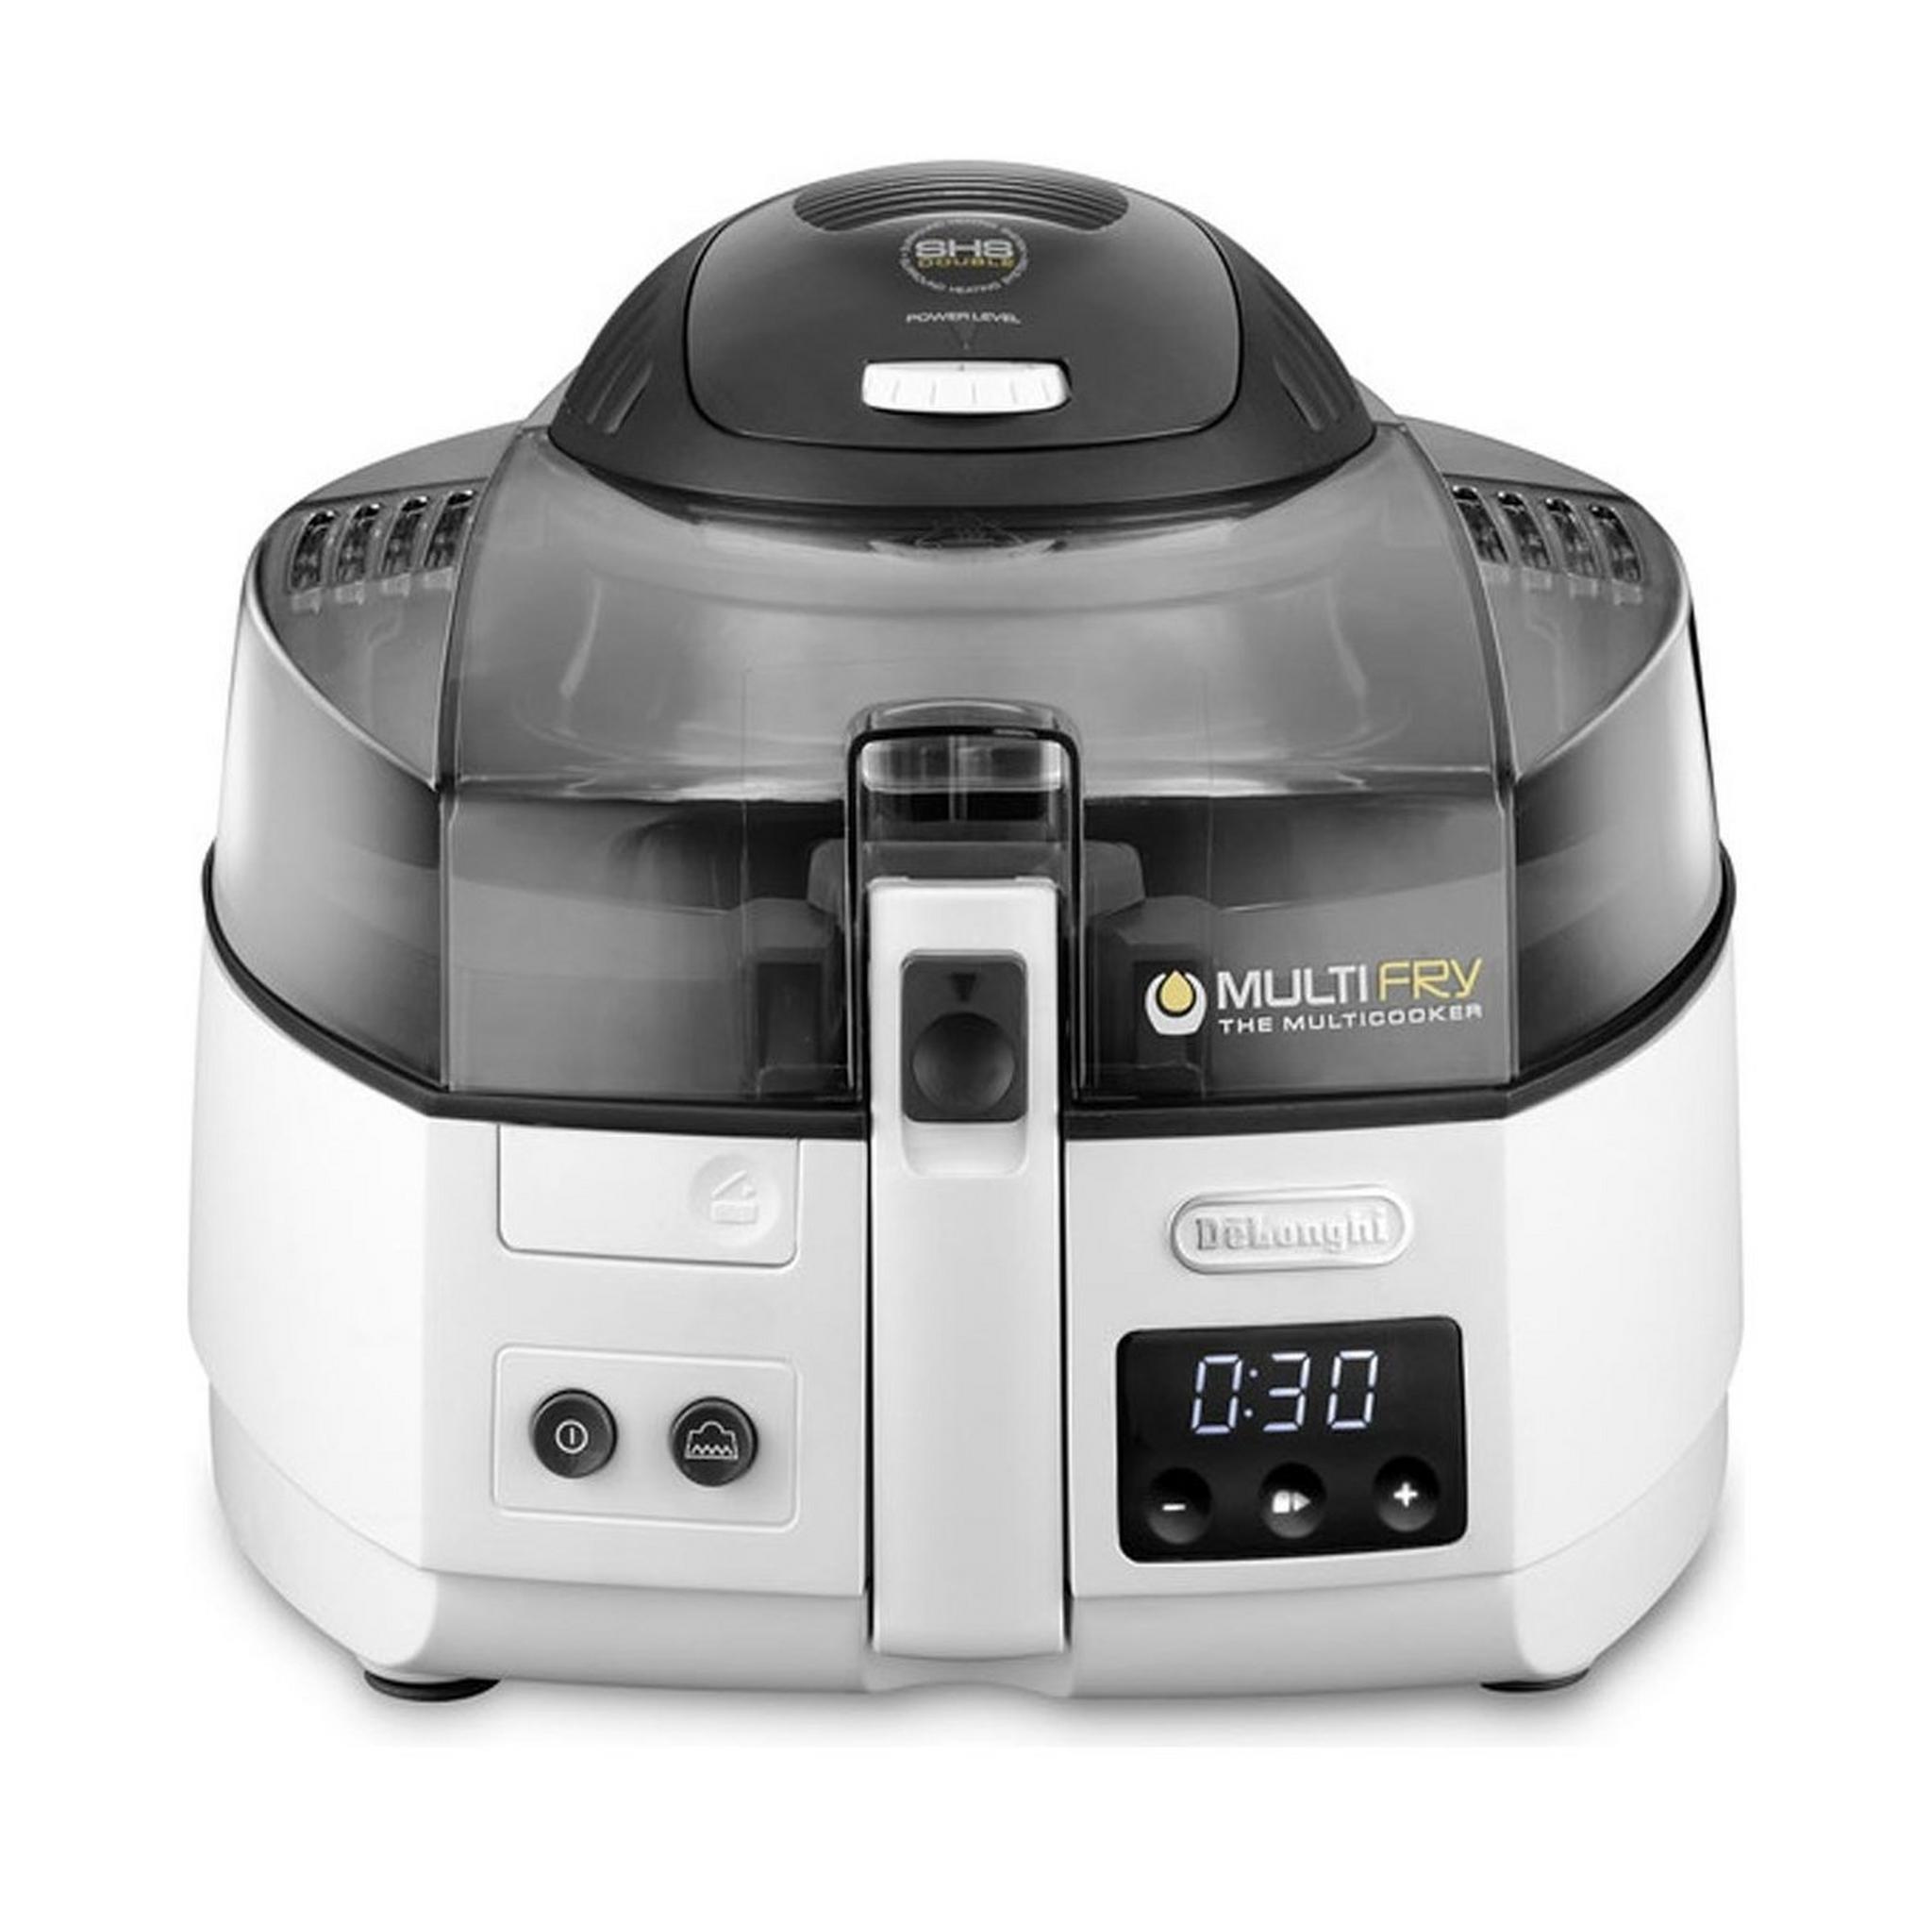 Delonghi Mulit-Purpose Fryer & Toaster,1400W, 1.5 KG, DLFH1373 - Silver